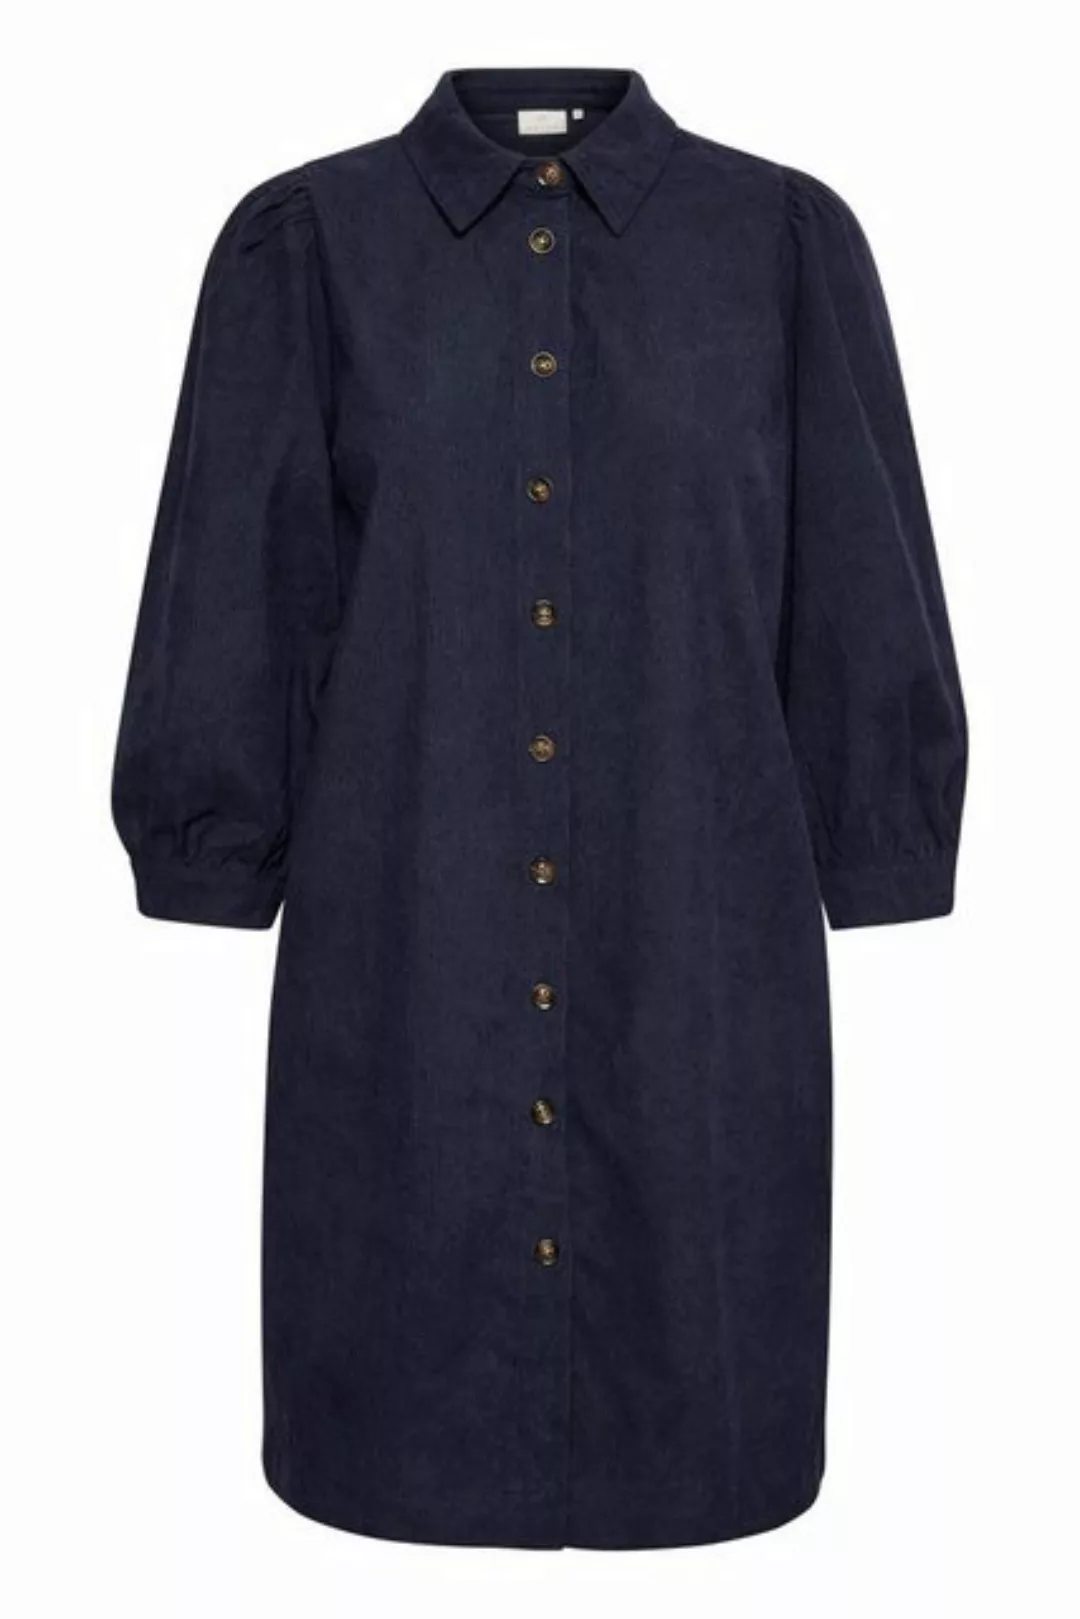 KAFFE Strickkleid Kleid KAjanna günstig online kaufen